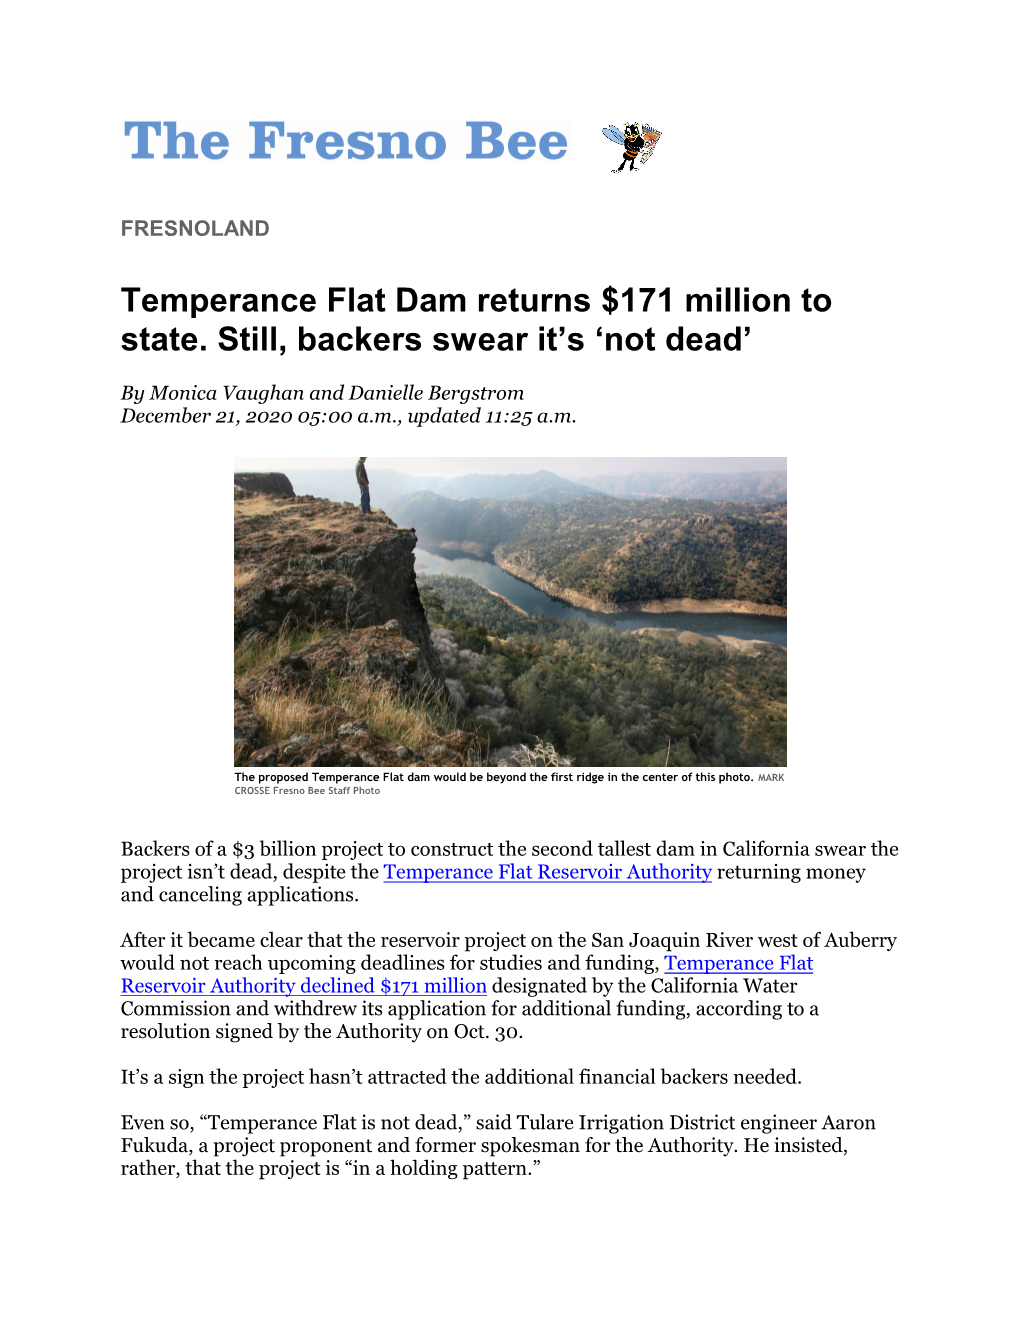 Temperance Flat Dam Returns $171 Million to State. Still, Backers Swear It’S ‘Not Dead’